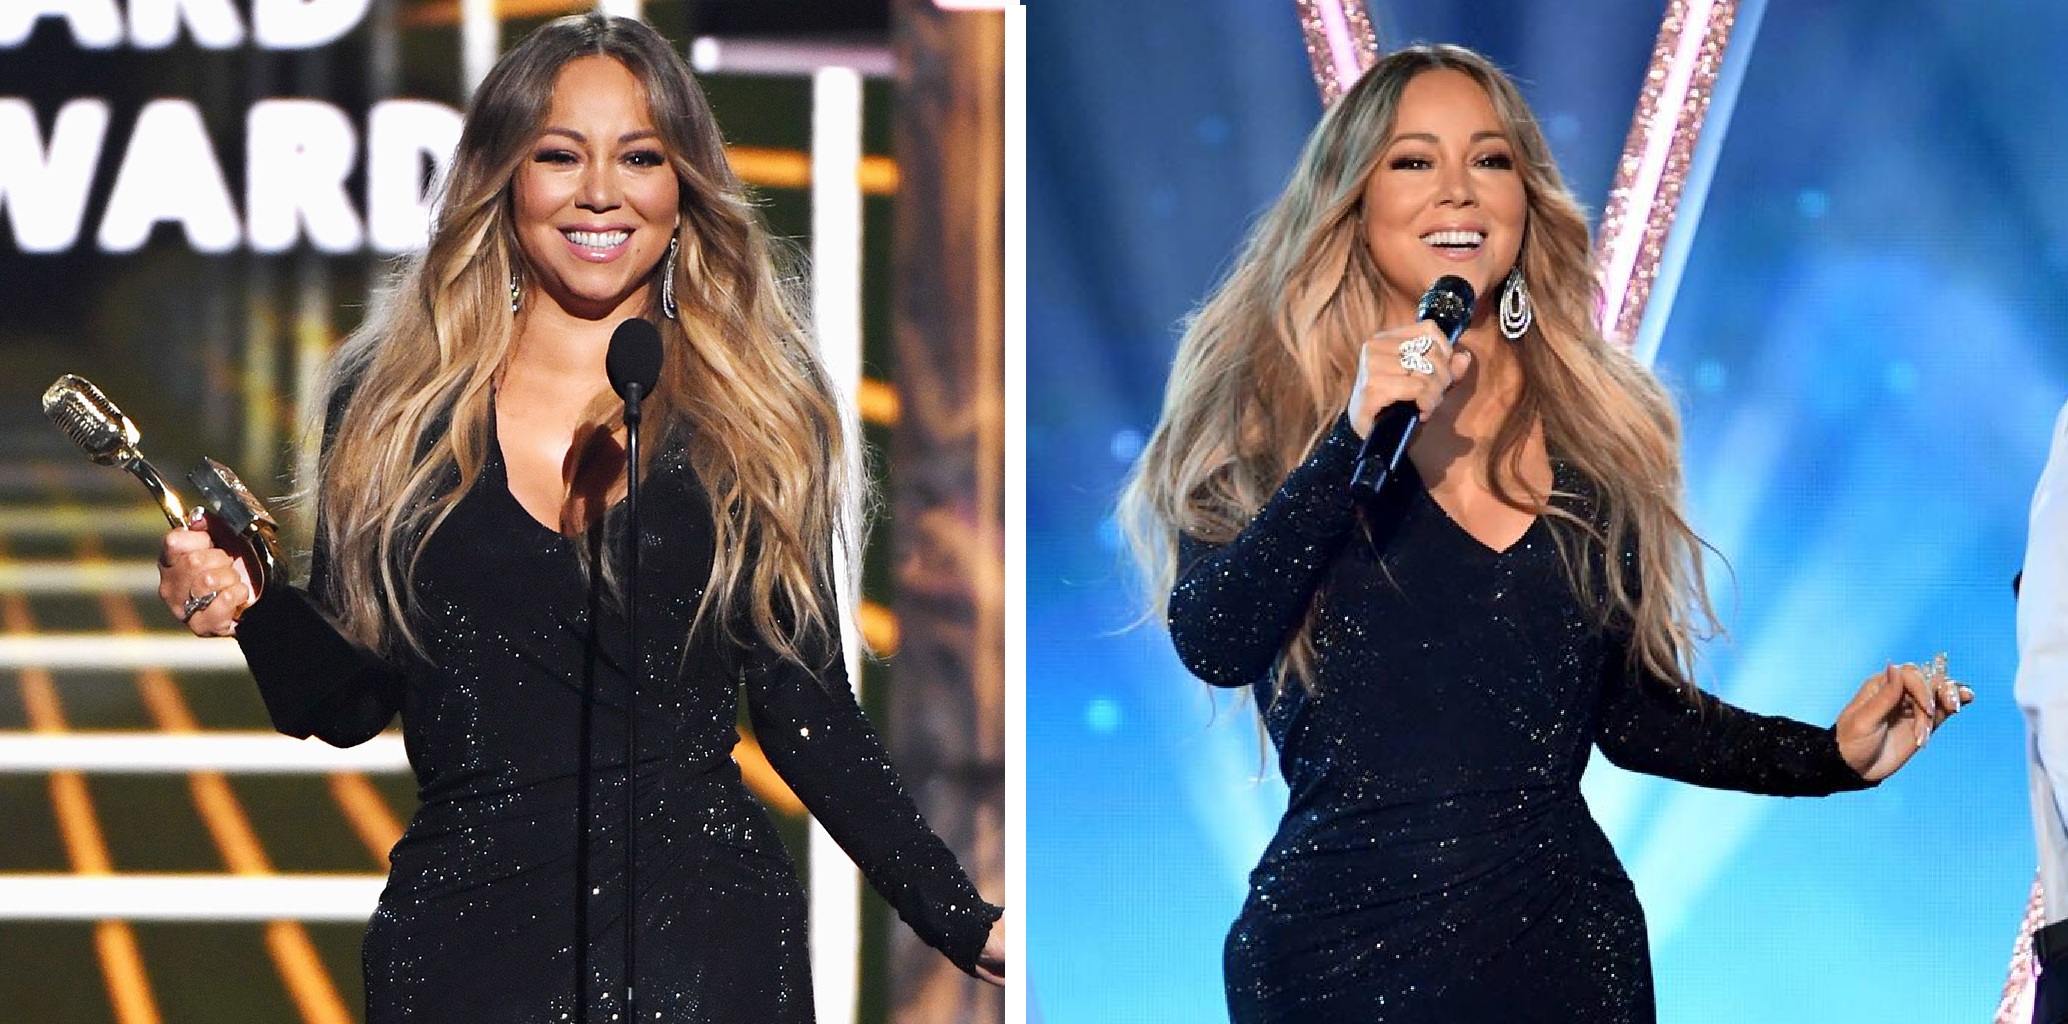 Watch: Mariah Carey Performs at Billboard Music Awards, Receives Icon Award